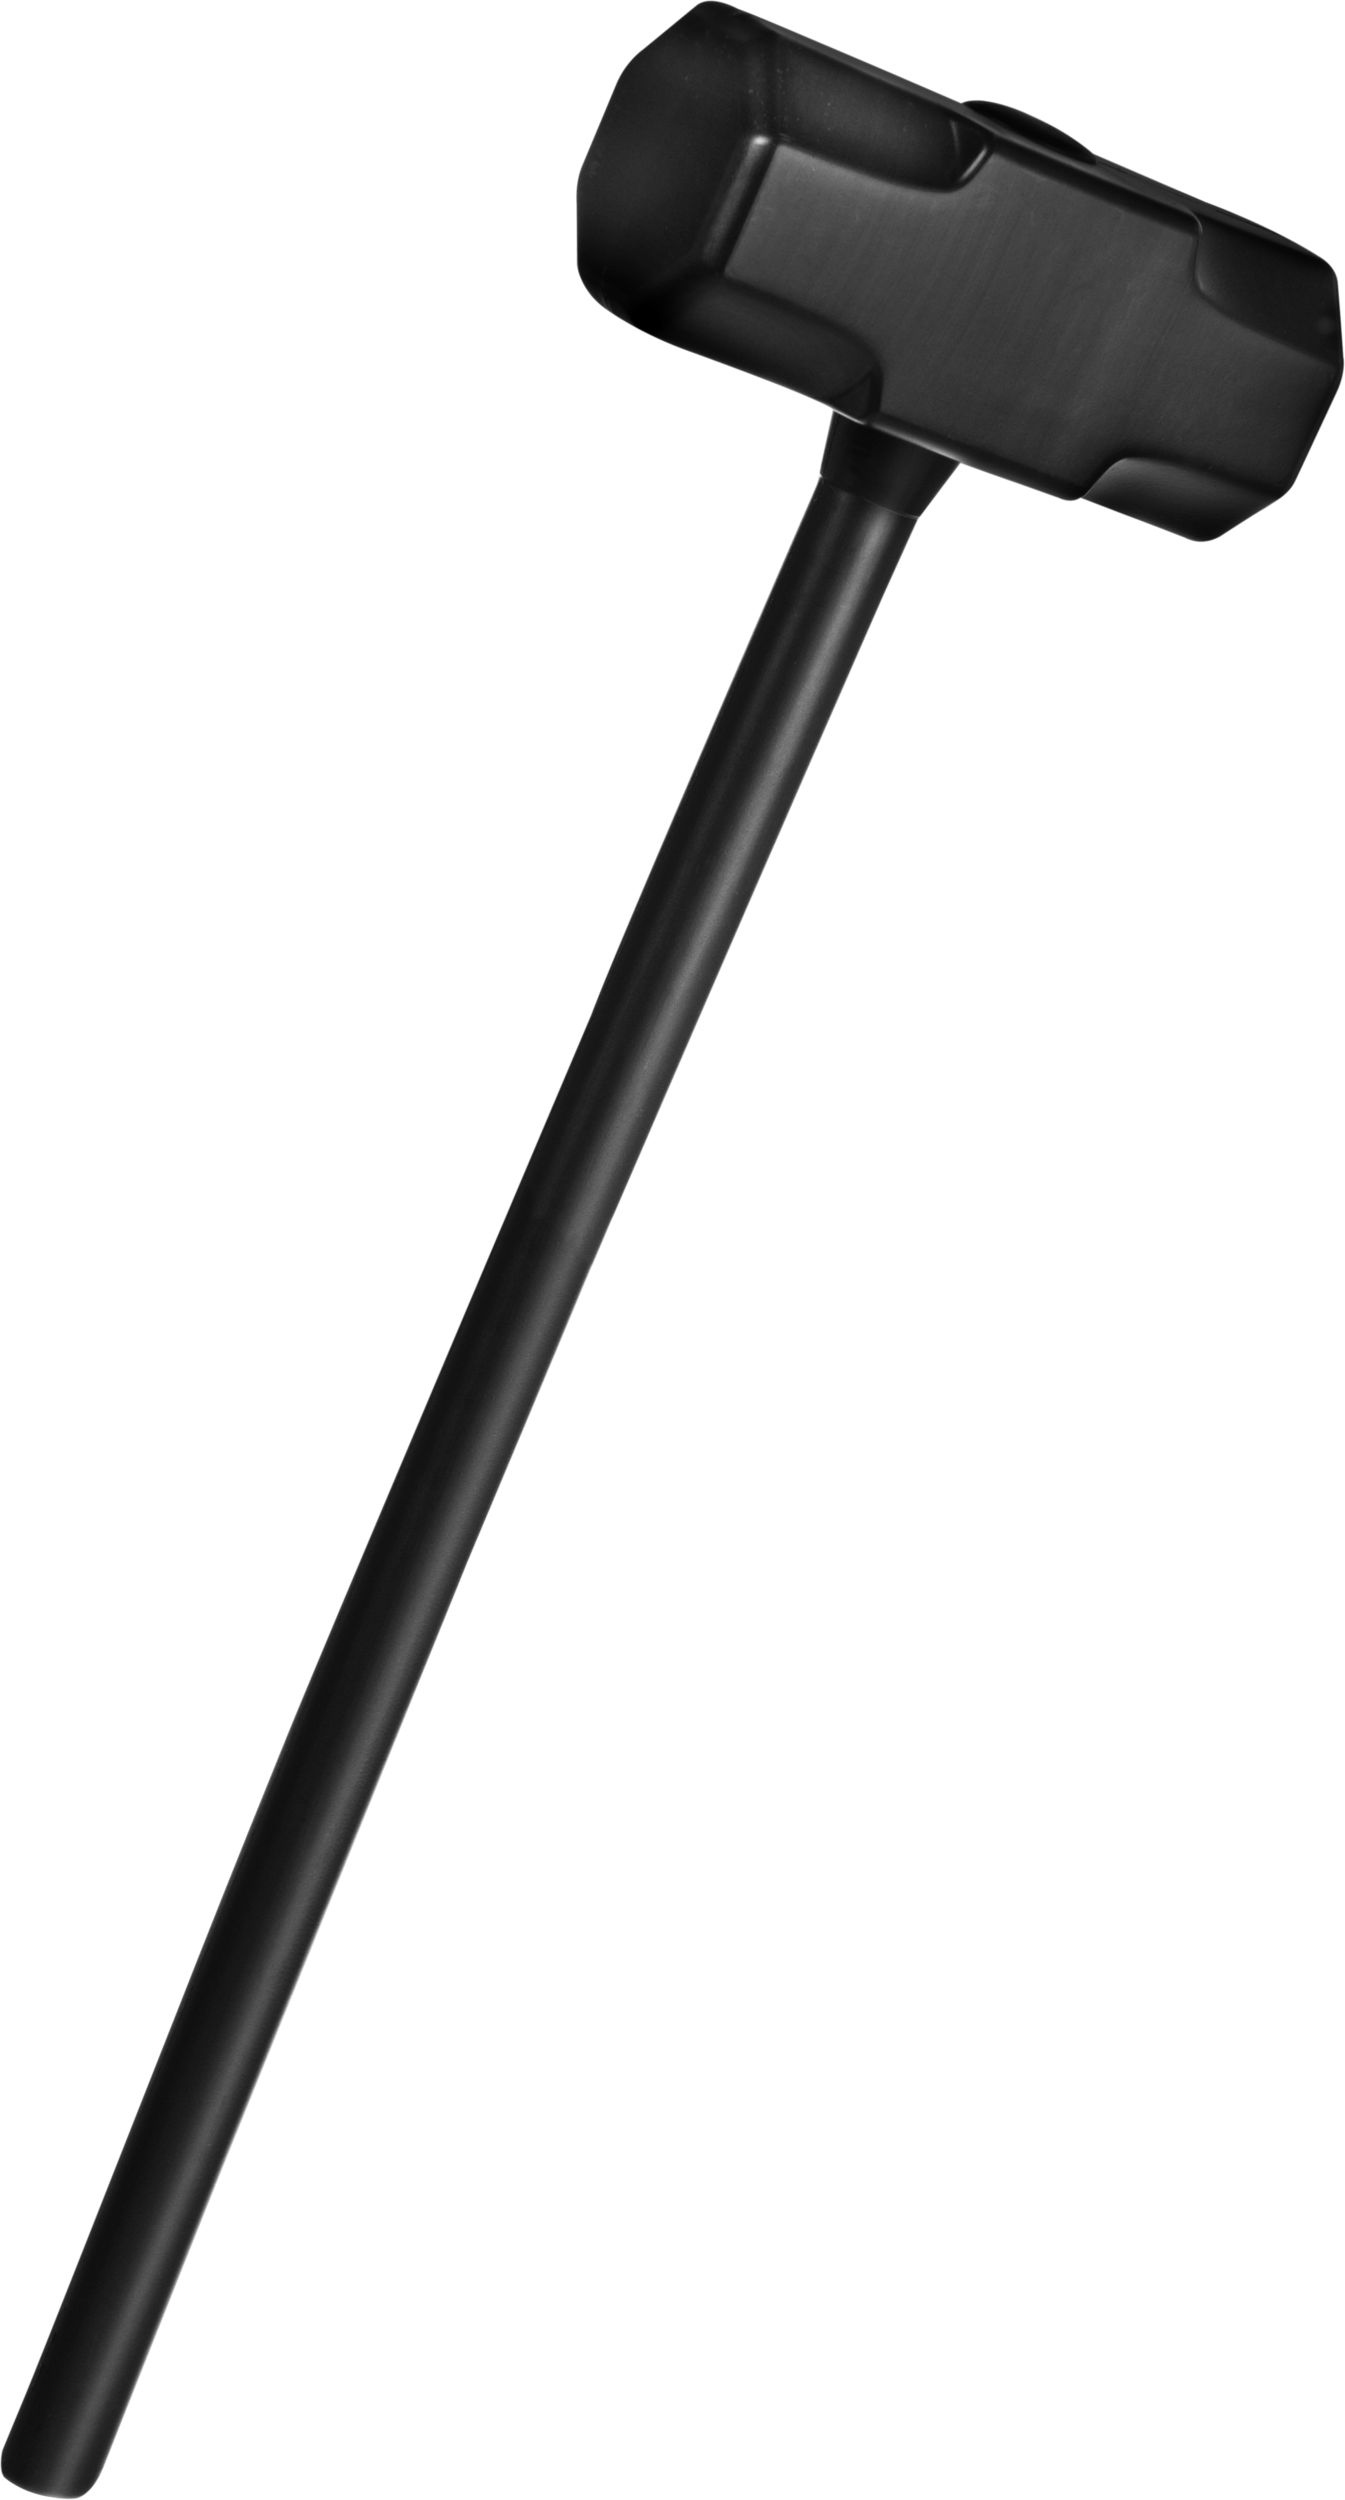 Mastercraft Fiberglass Sledge Hammer, 4-lb Head with 16-in Handle